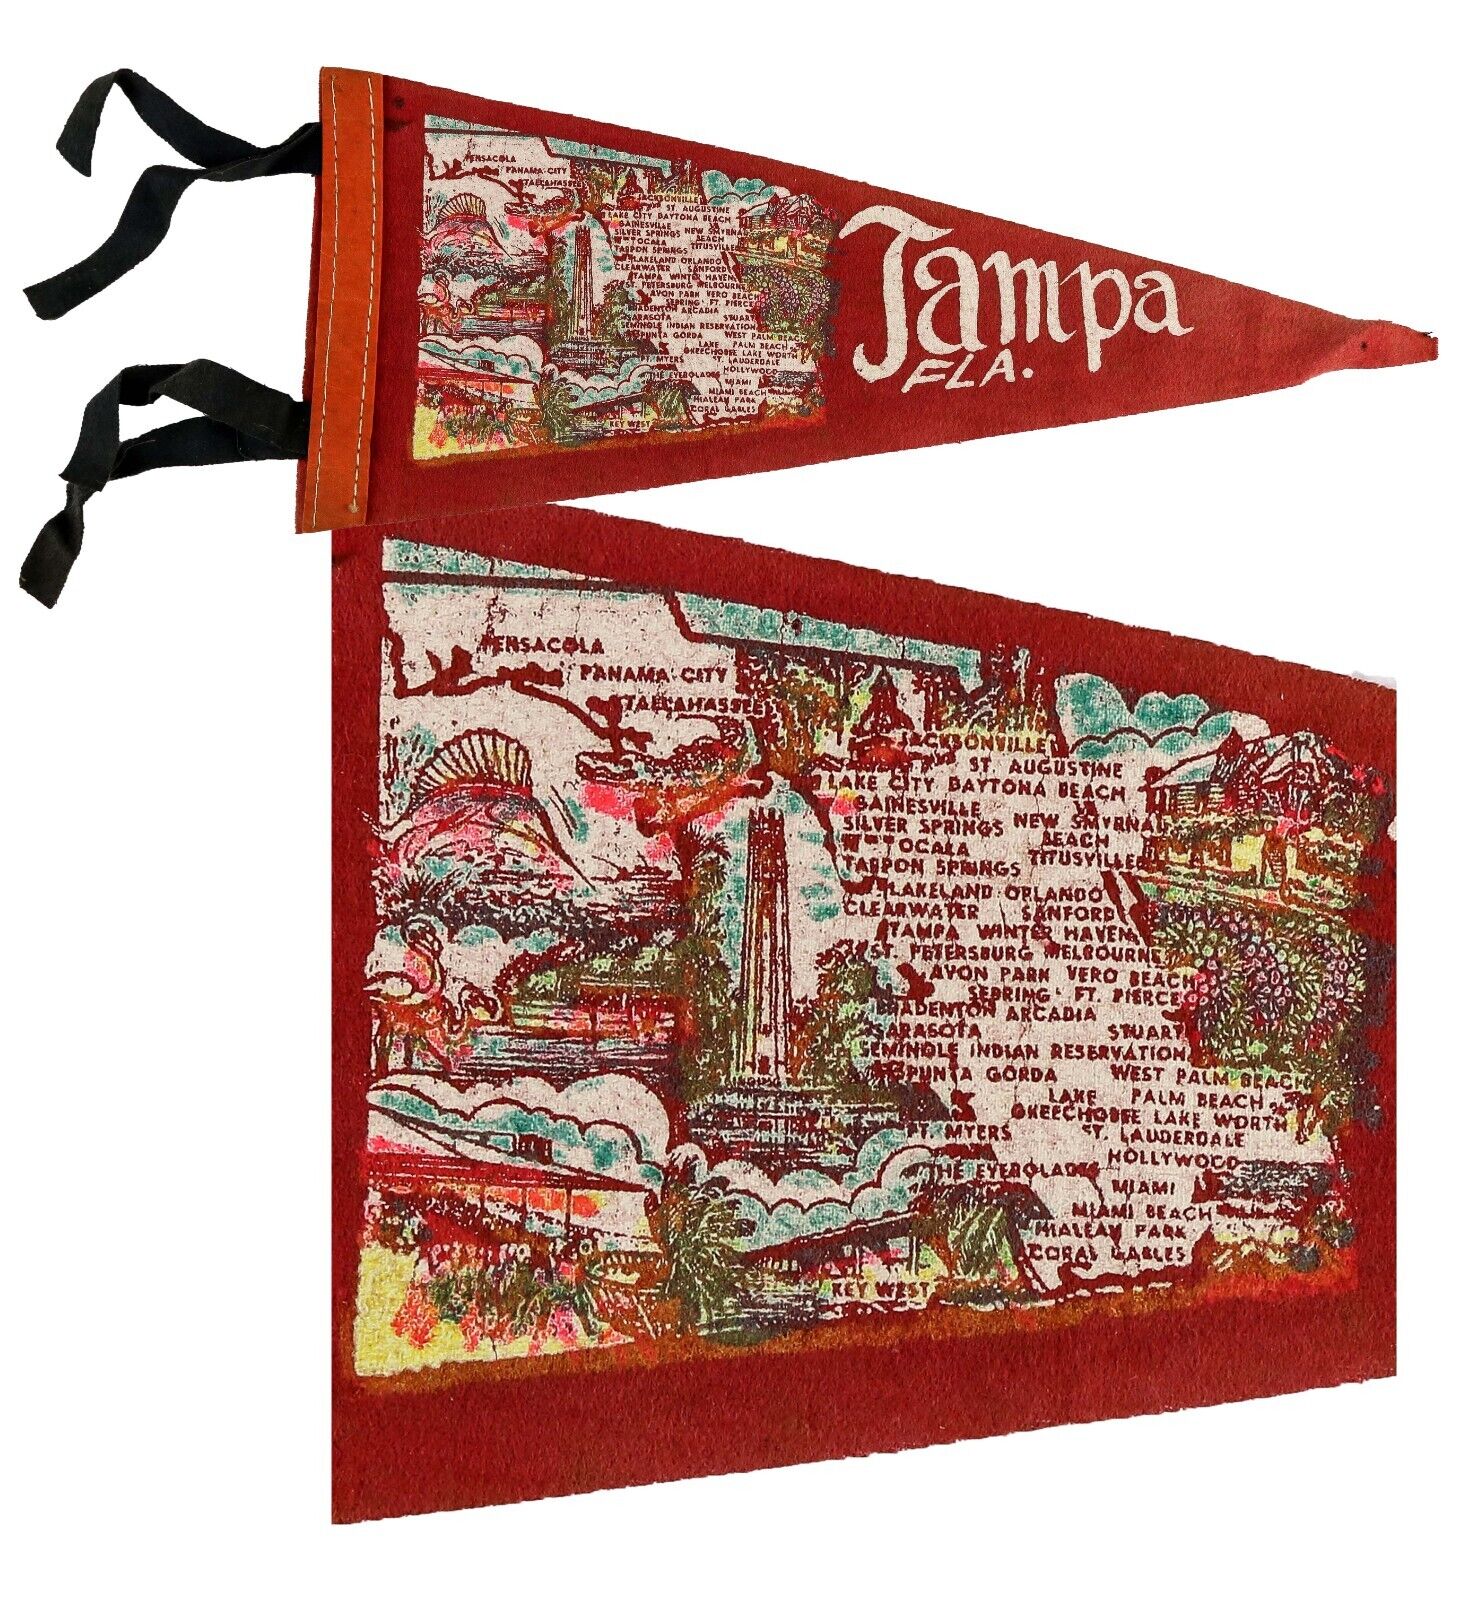 ⭐ Vintage Tampa FLA. Felt Pennant ⭐ State of Florida City Names & Images ⭐